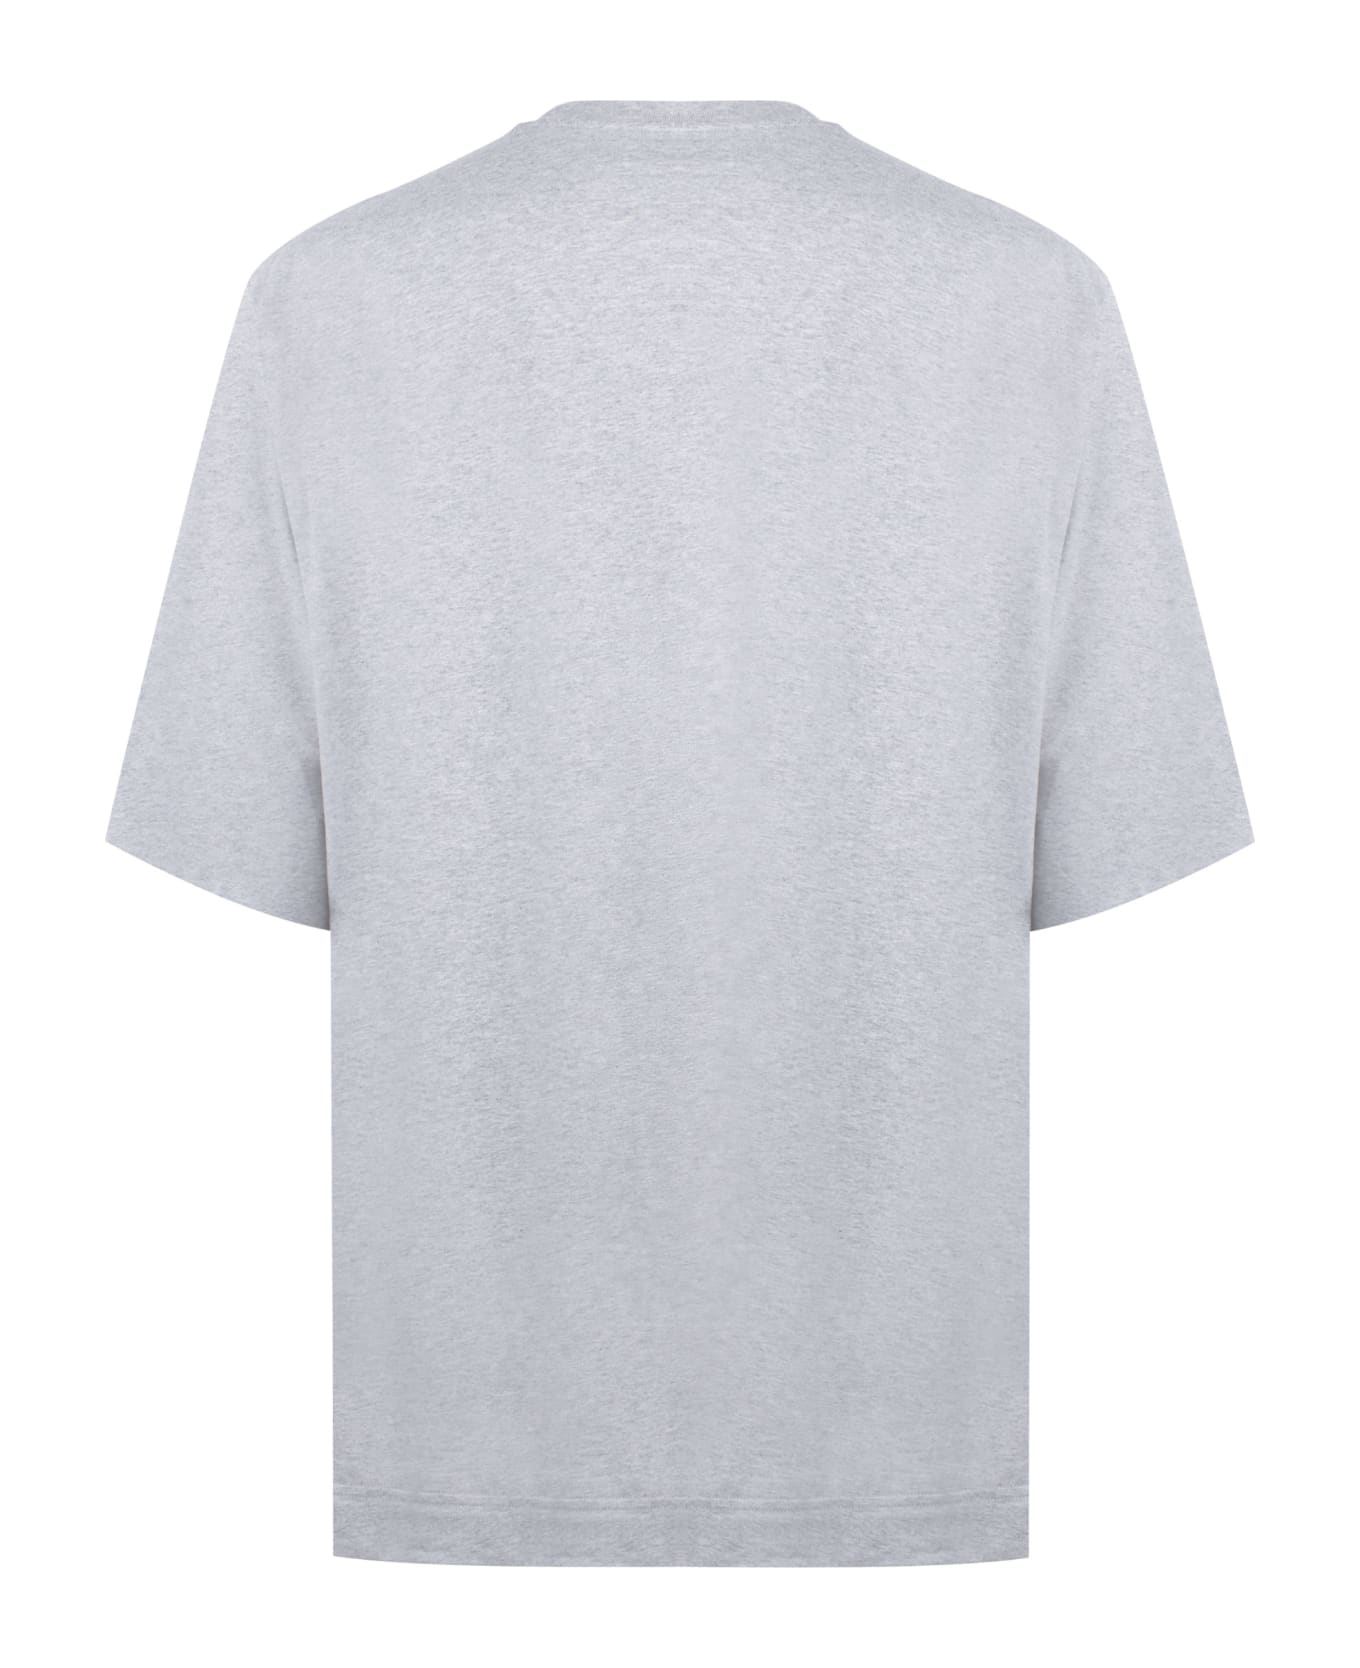 Givenchy Cotton Crew-neck T-shirt - grey